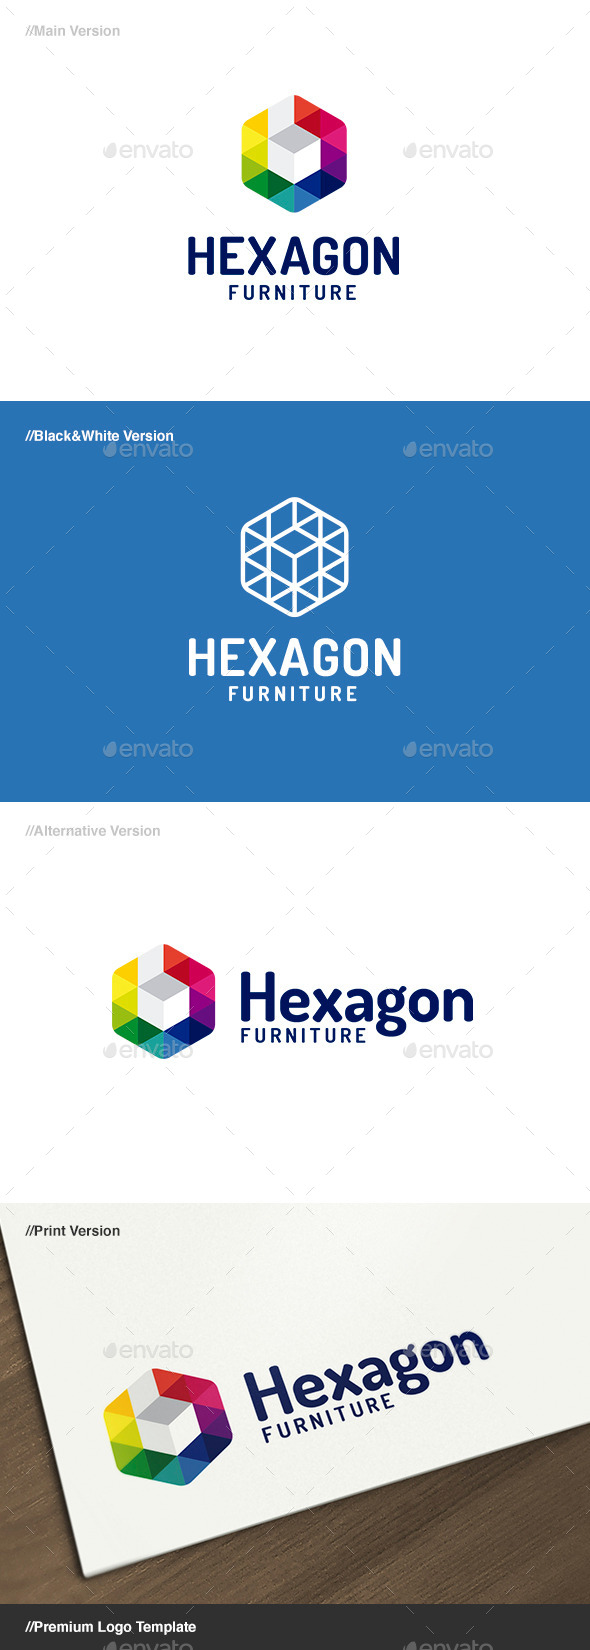 Hexagon Furniture Logo